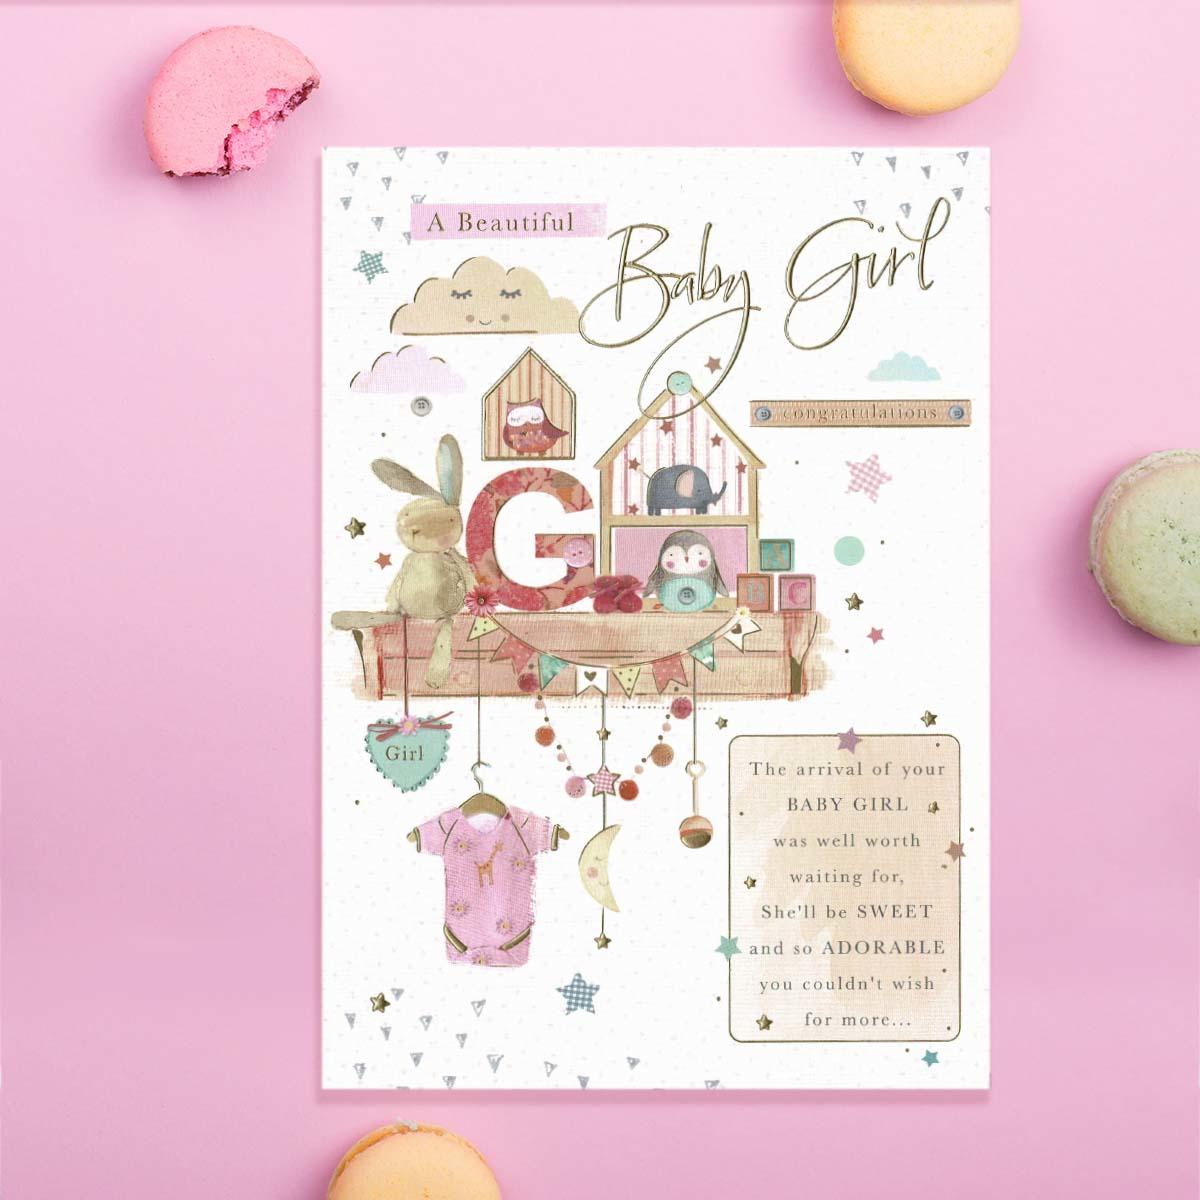 Baby Girl Birth Card Shown Displayed